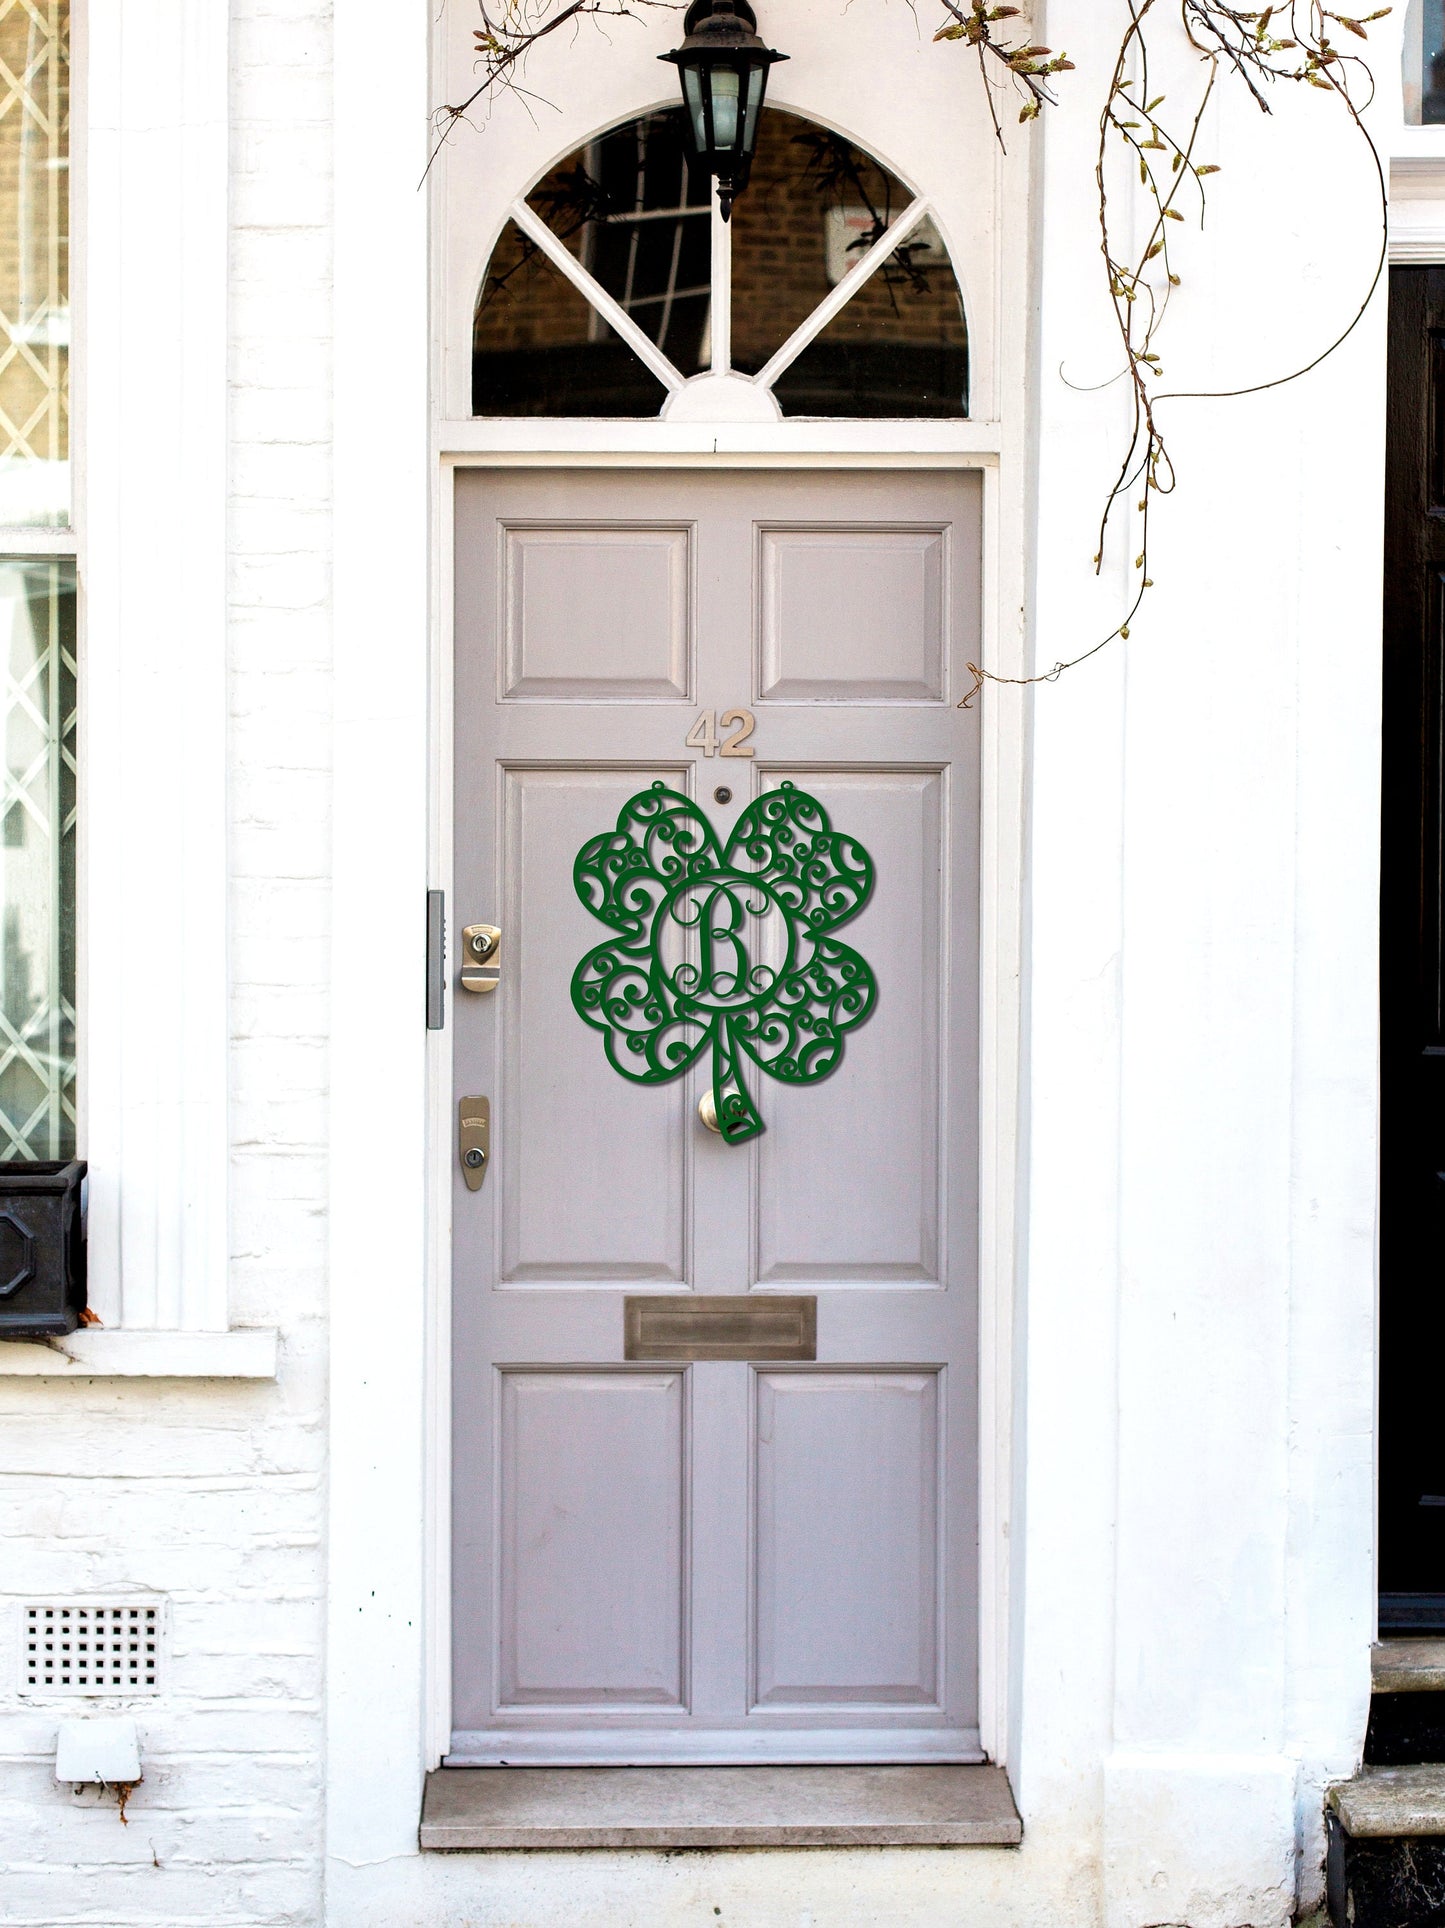 Monogram Shamrock, Shamrock Door Hanger, Shamrock, St Patrick's Day Decor, Irish, March Decor, Spring Wreath, Four Leaf Clover, Metal Signs